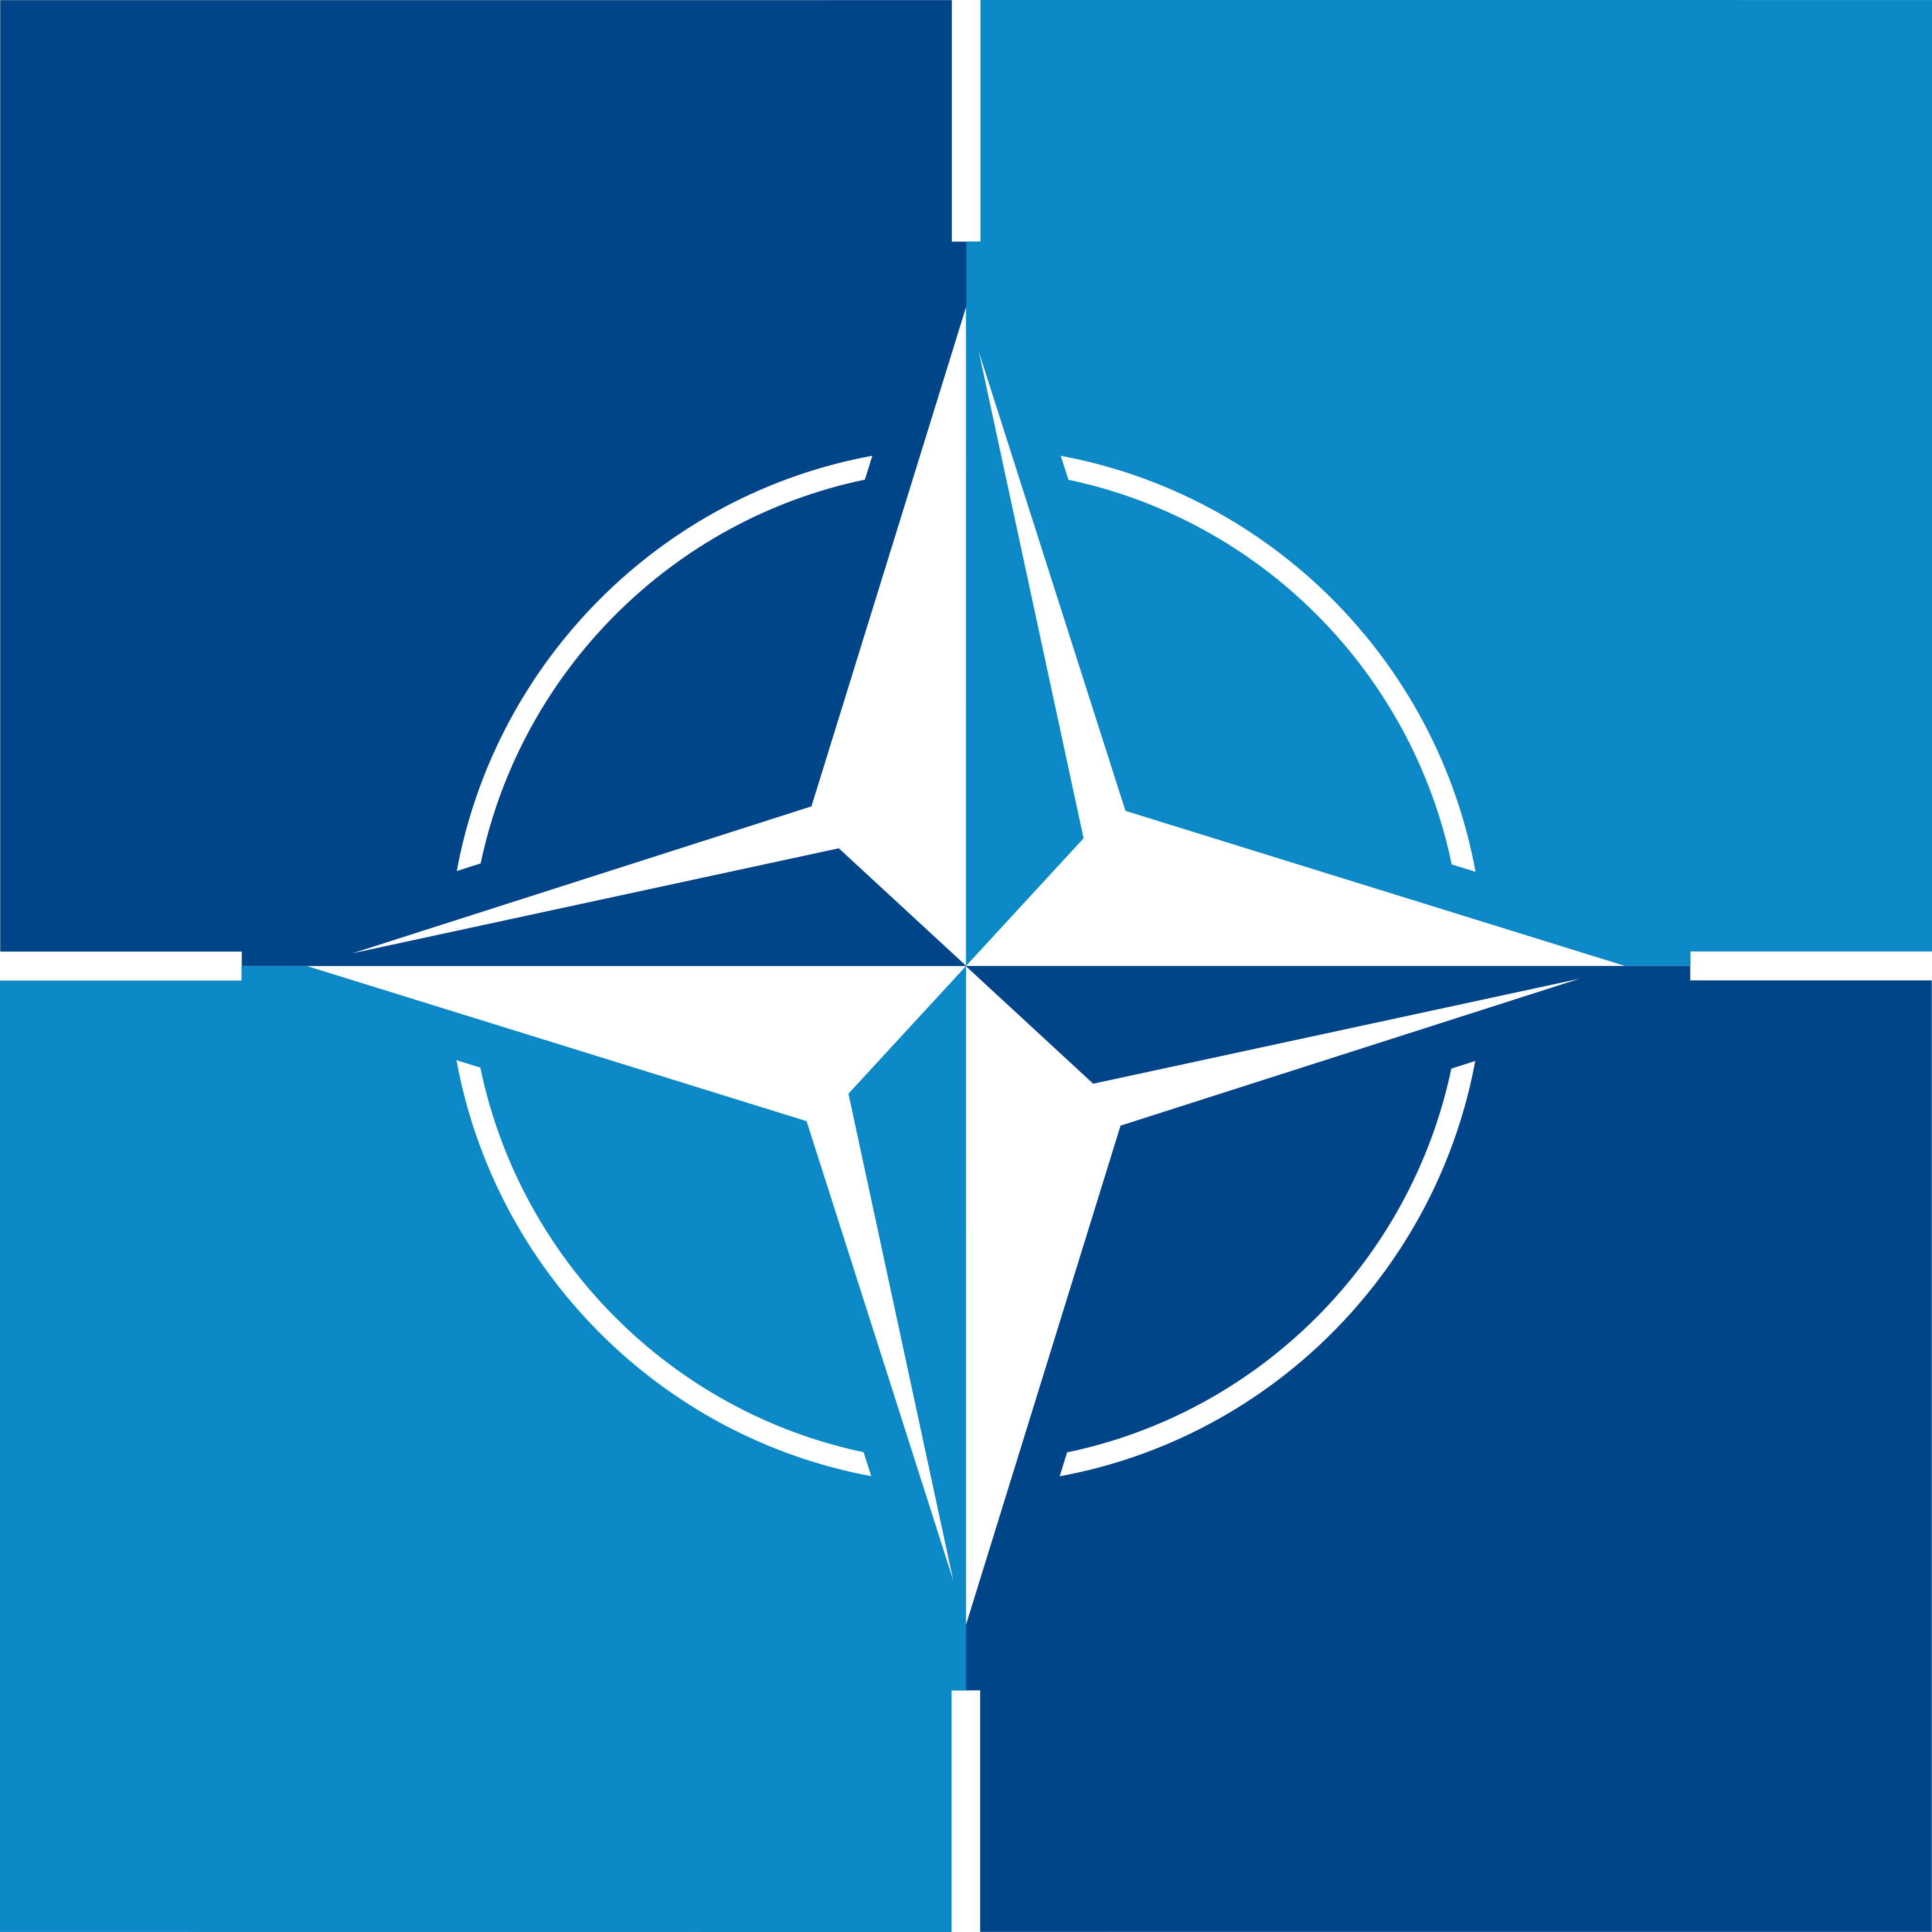 nato otan logo 5 - Nato Logo - Otan Logo